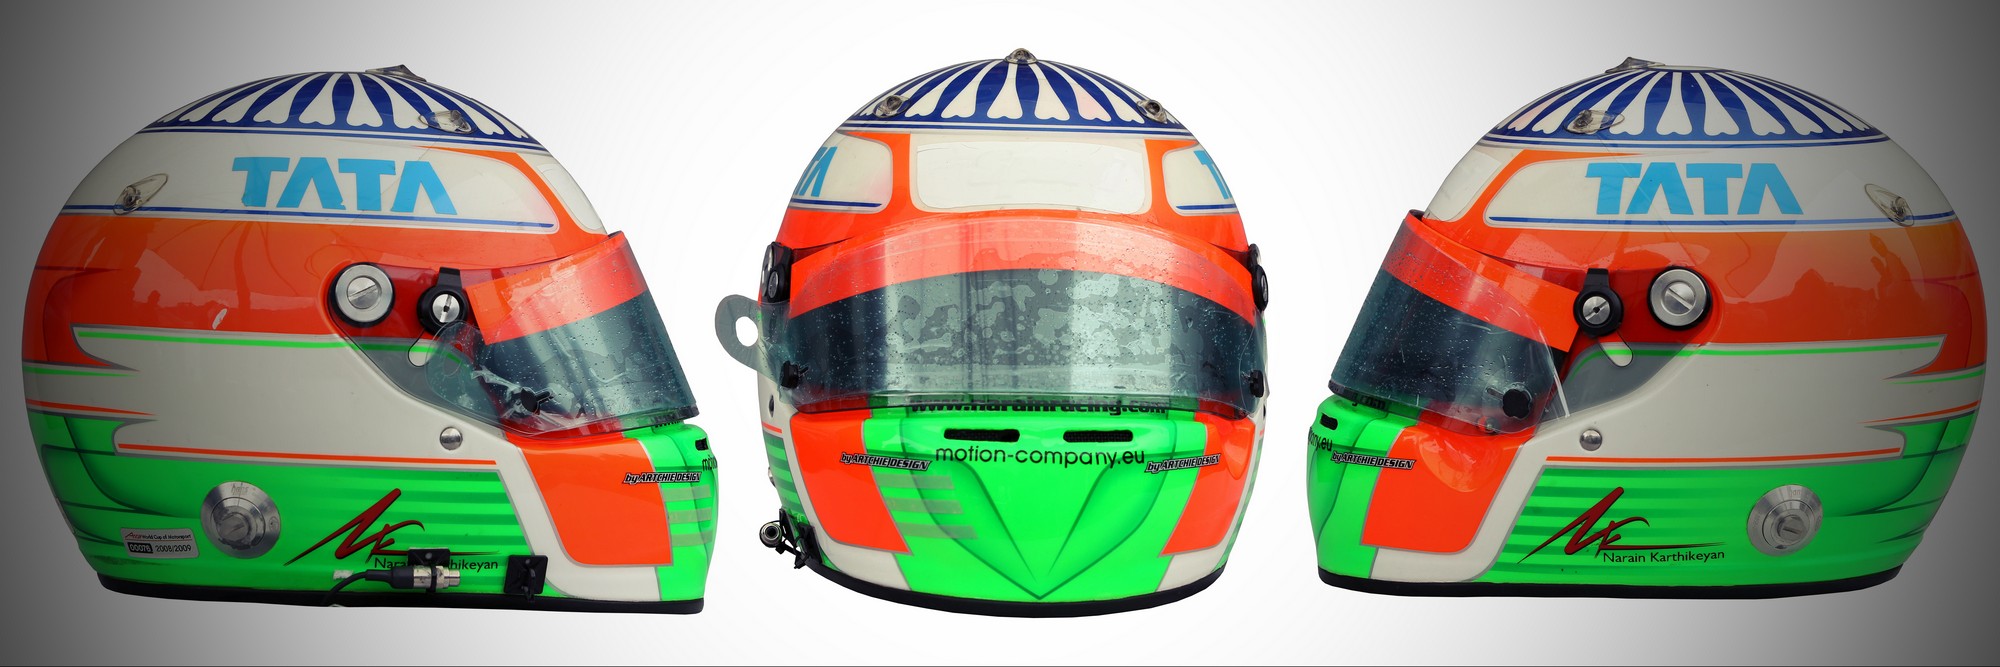 Шлем Нараина Картикеяна на сезон 2011 года | 2011 helmet of Narain Karthikeyan